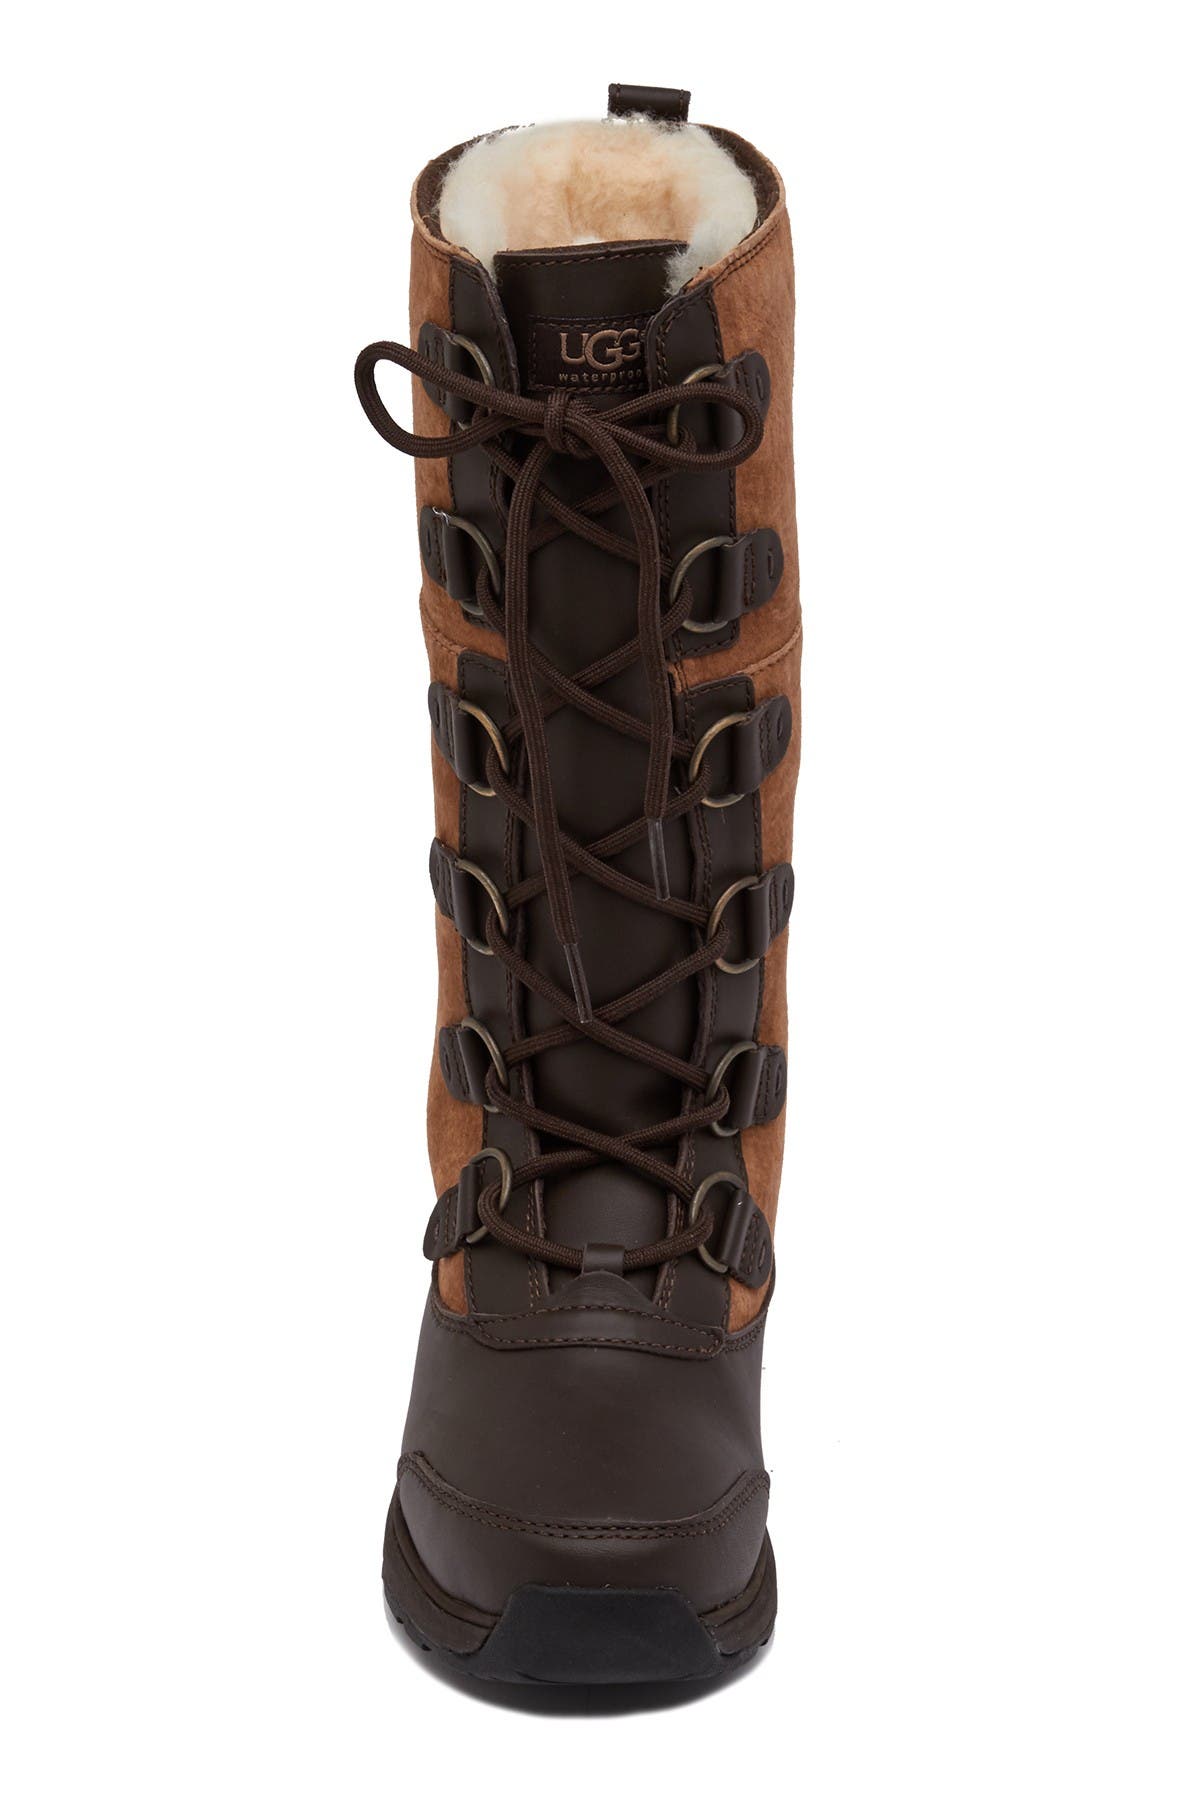 atlason waterproof uggpure lined boot